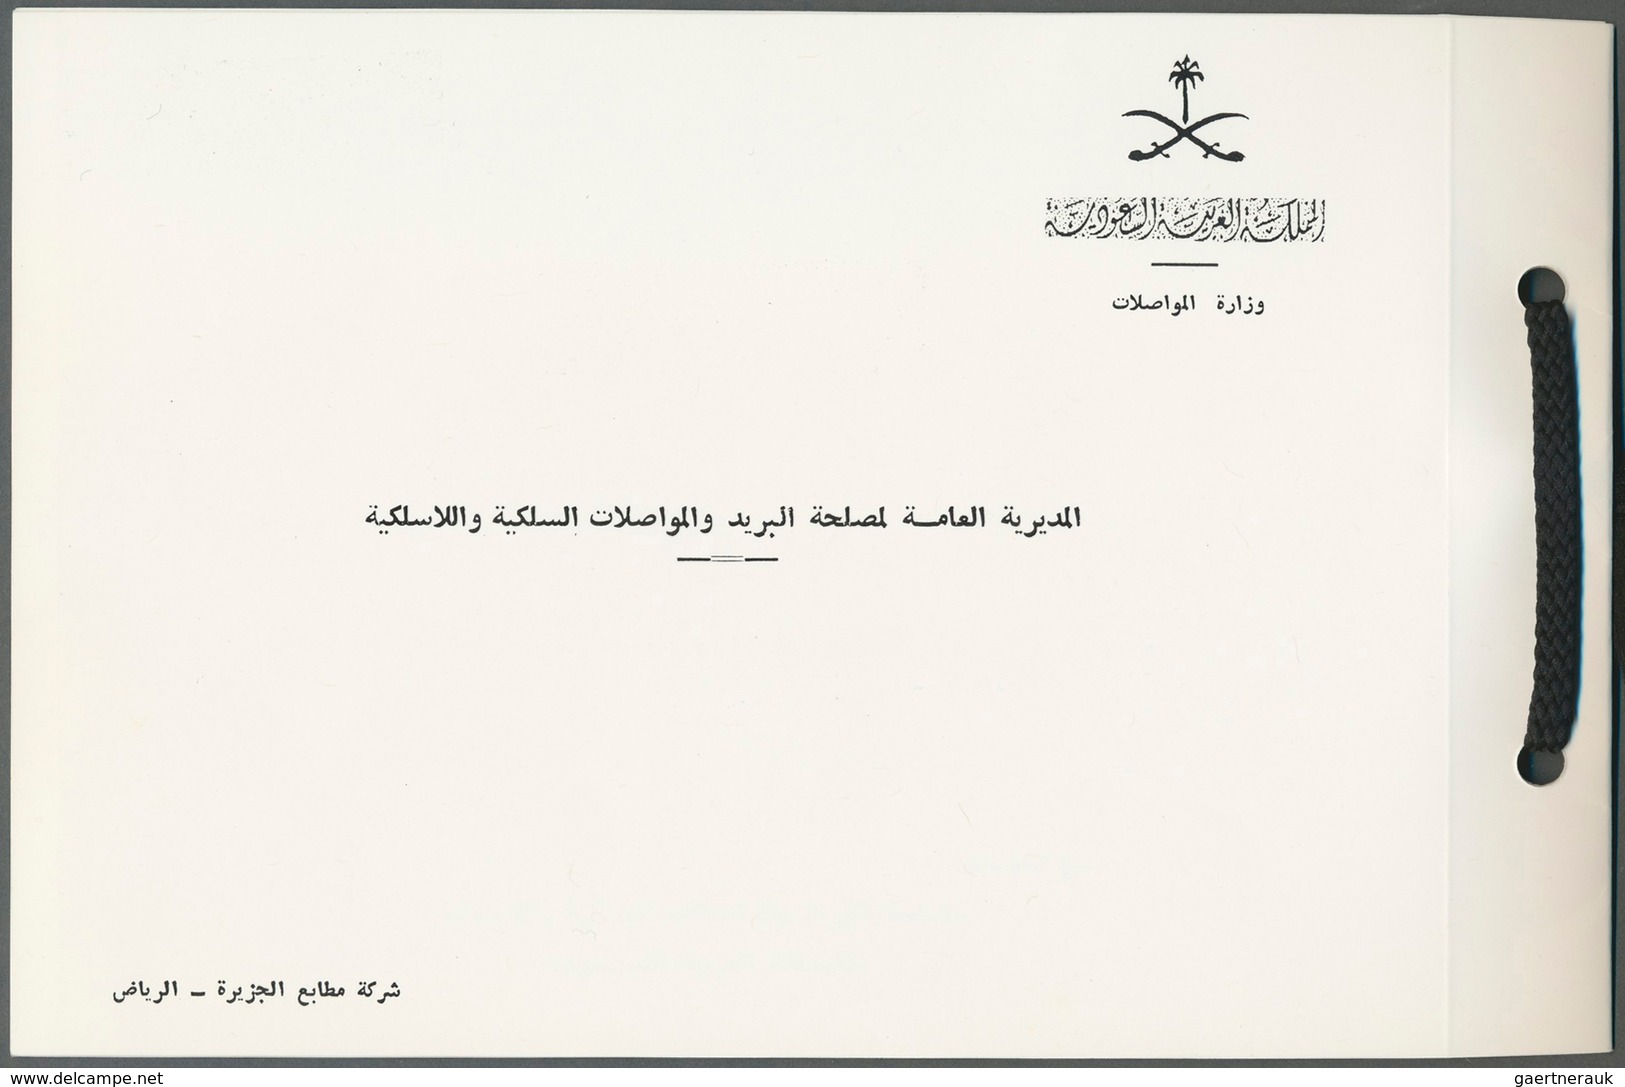 Saudi-Arabien: 1960-62: Presentation Folder By The P&T General Director Containing Top Values Of Wad - Saoedi-Arabië